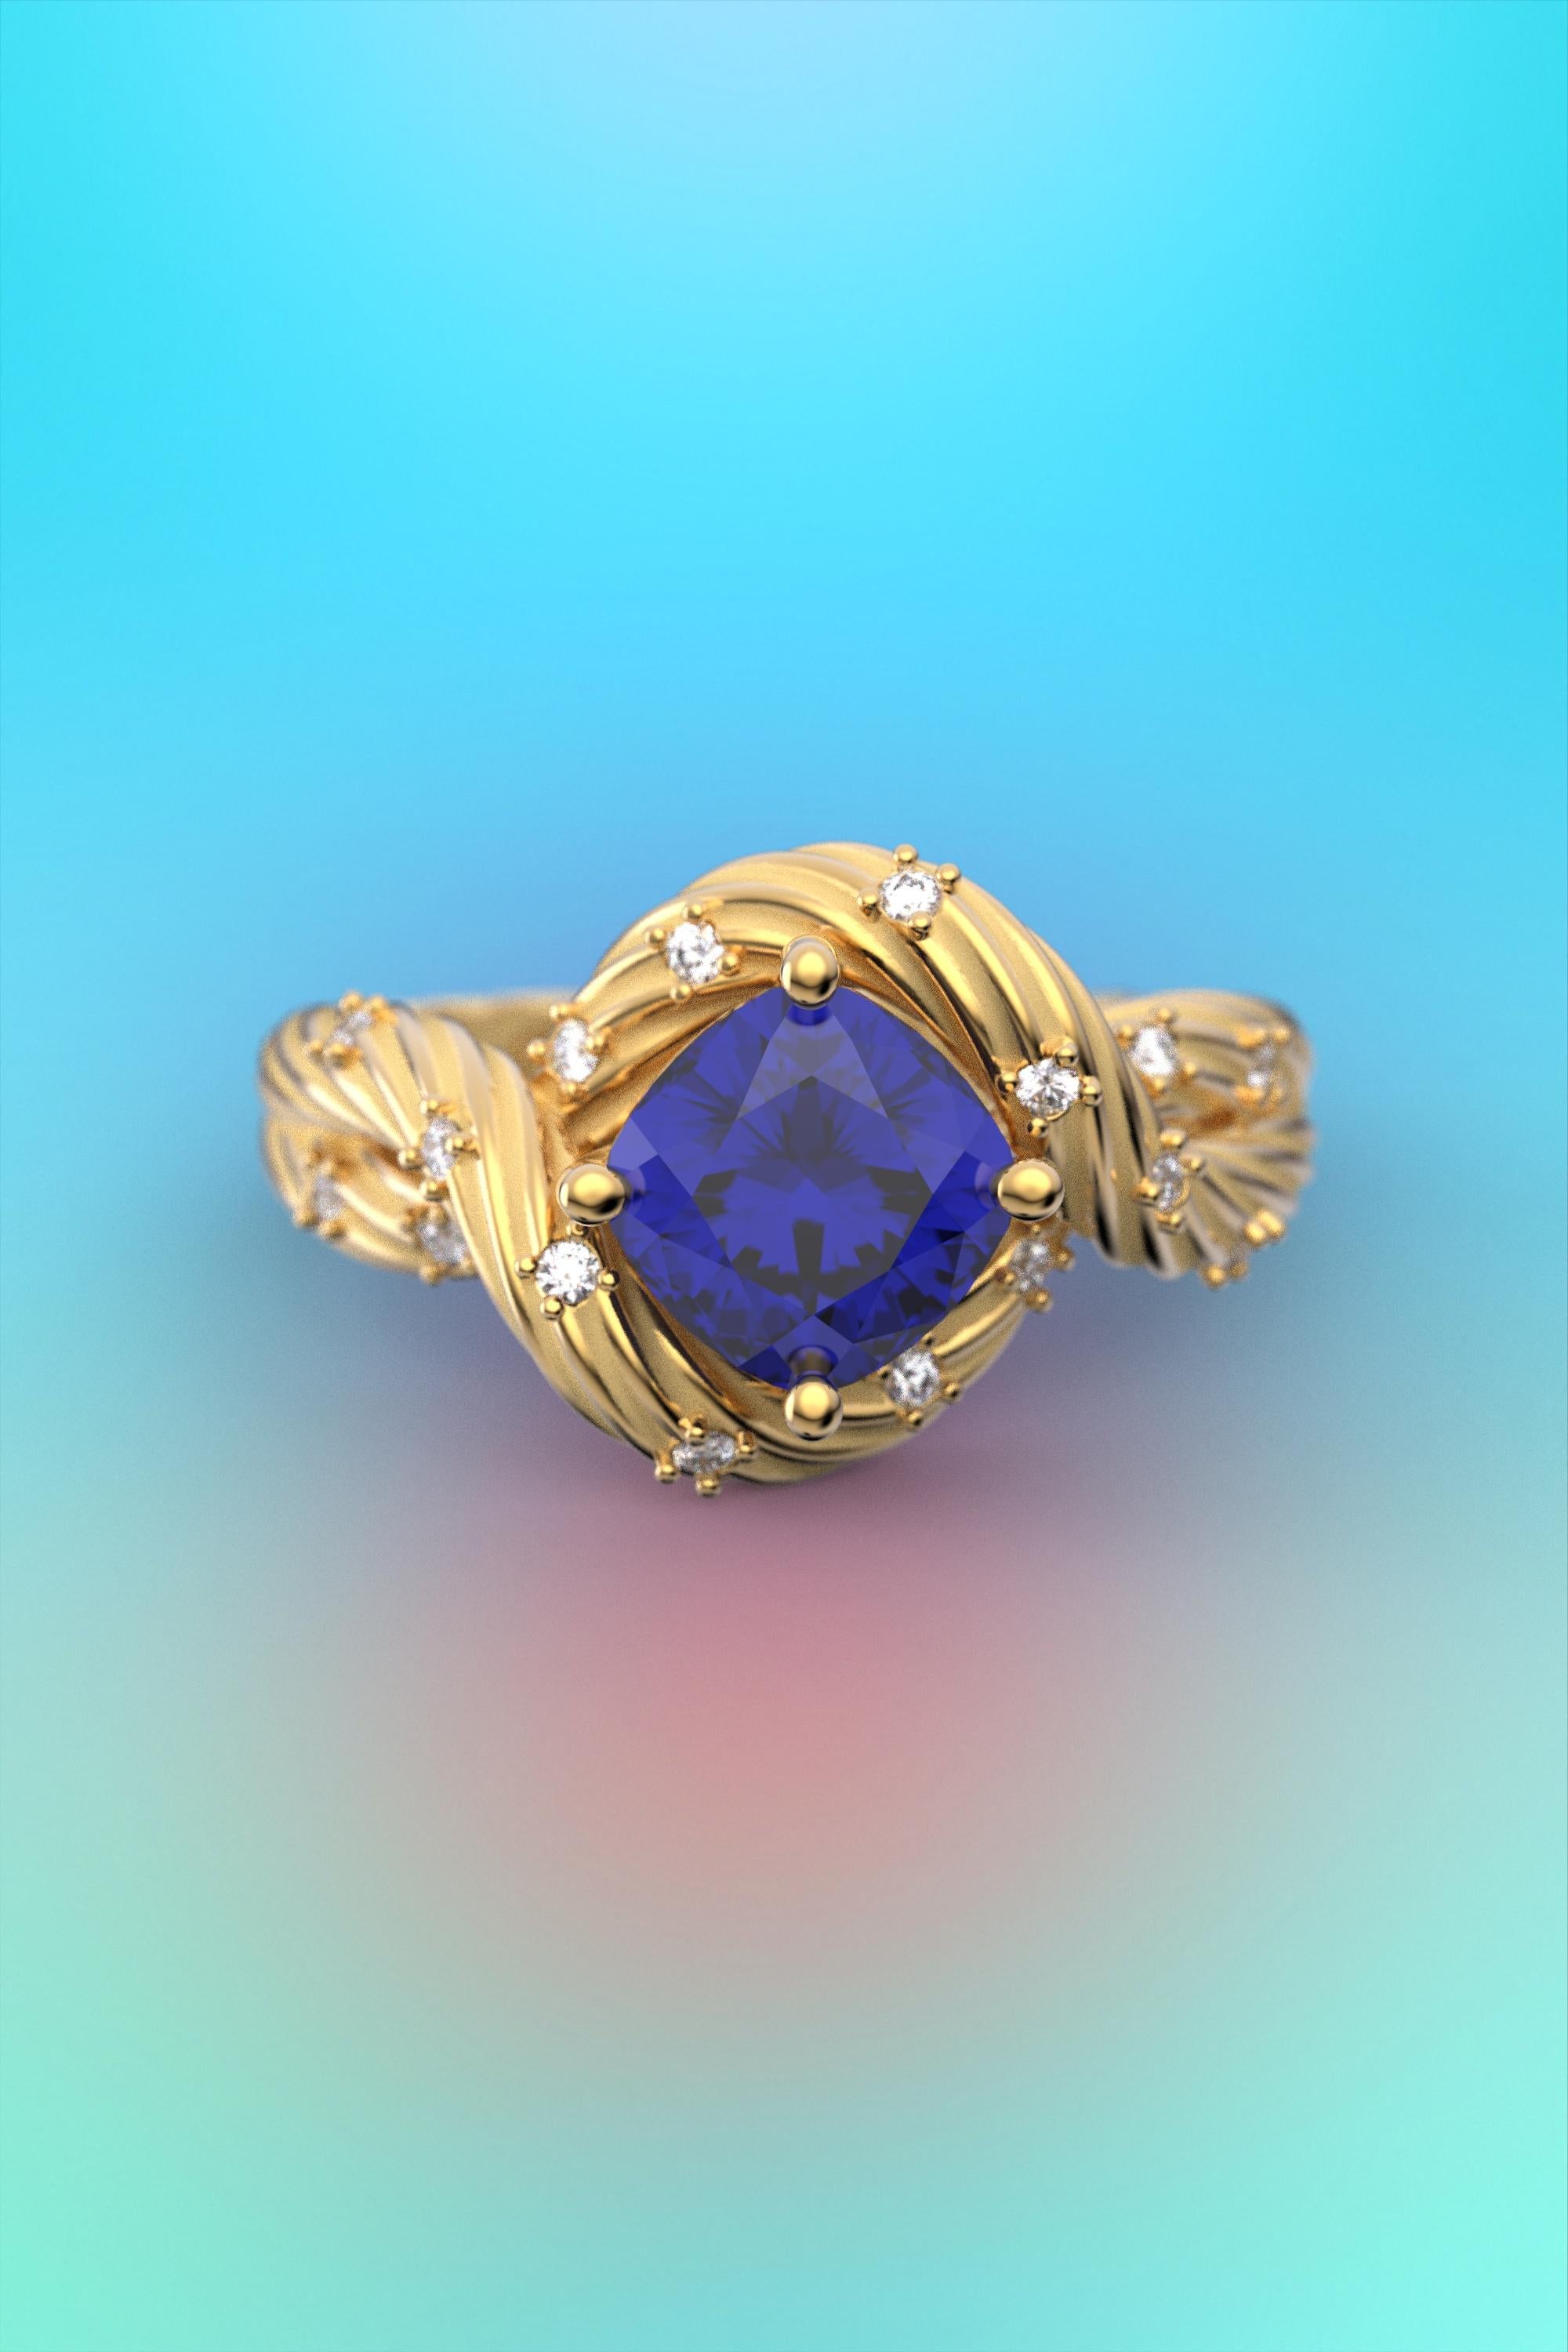 For Sale:  Tanzanite and Diamonds Statement Ring in 18k Solid Gold, Italian Fine Jewelry 17